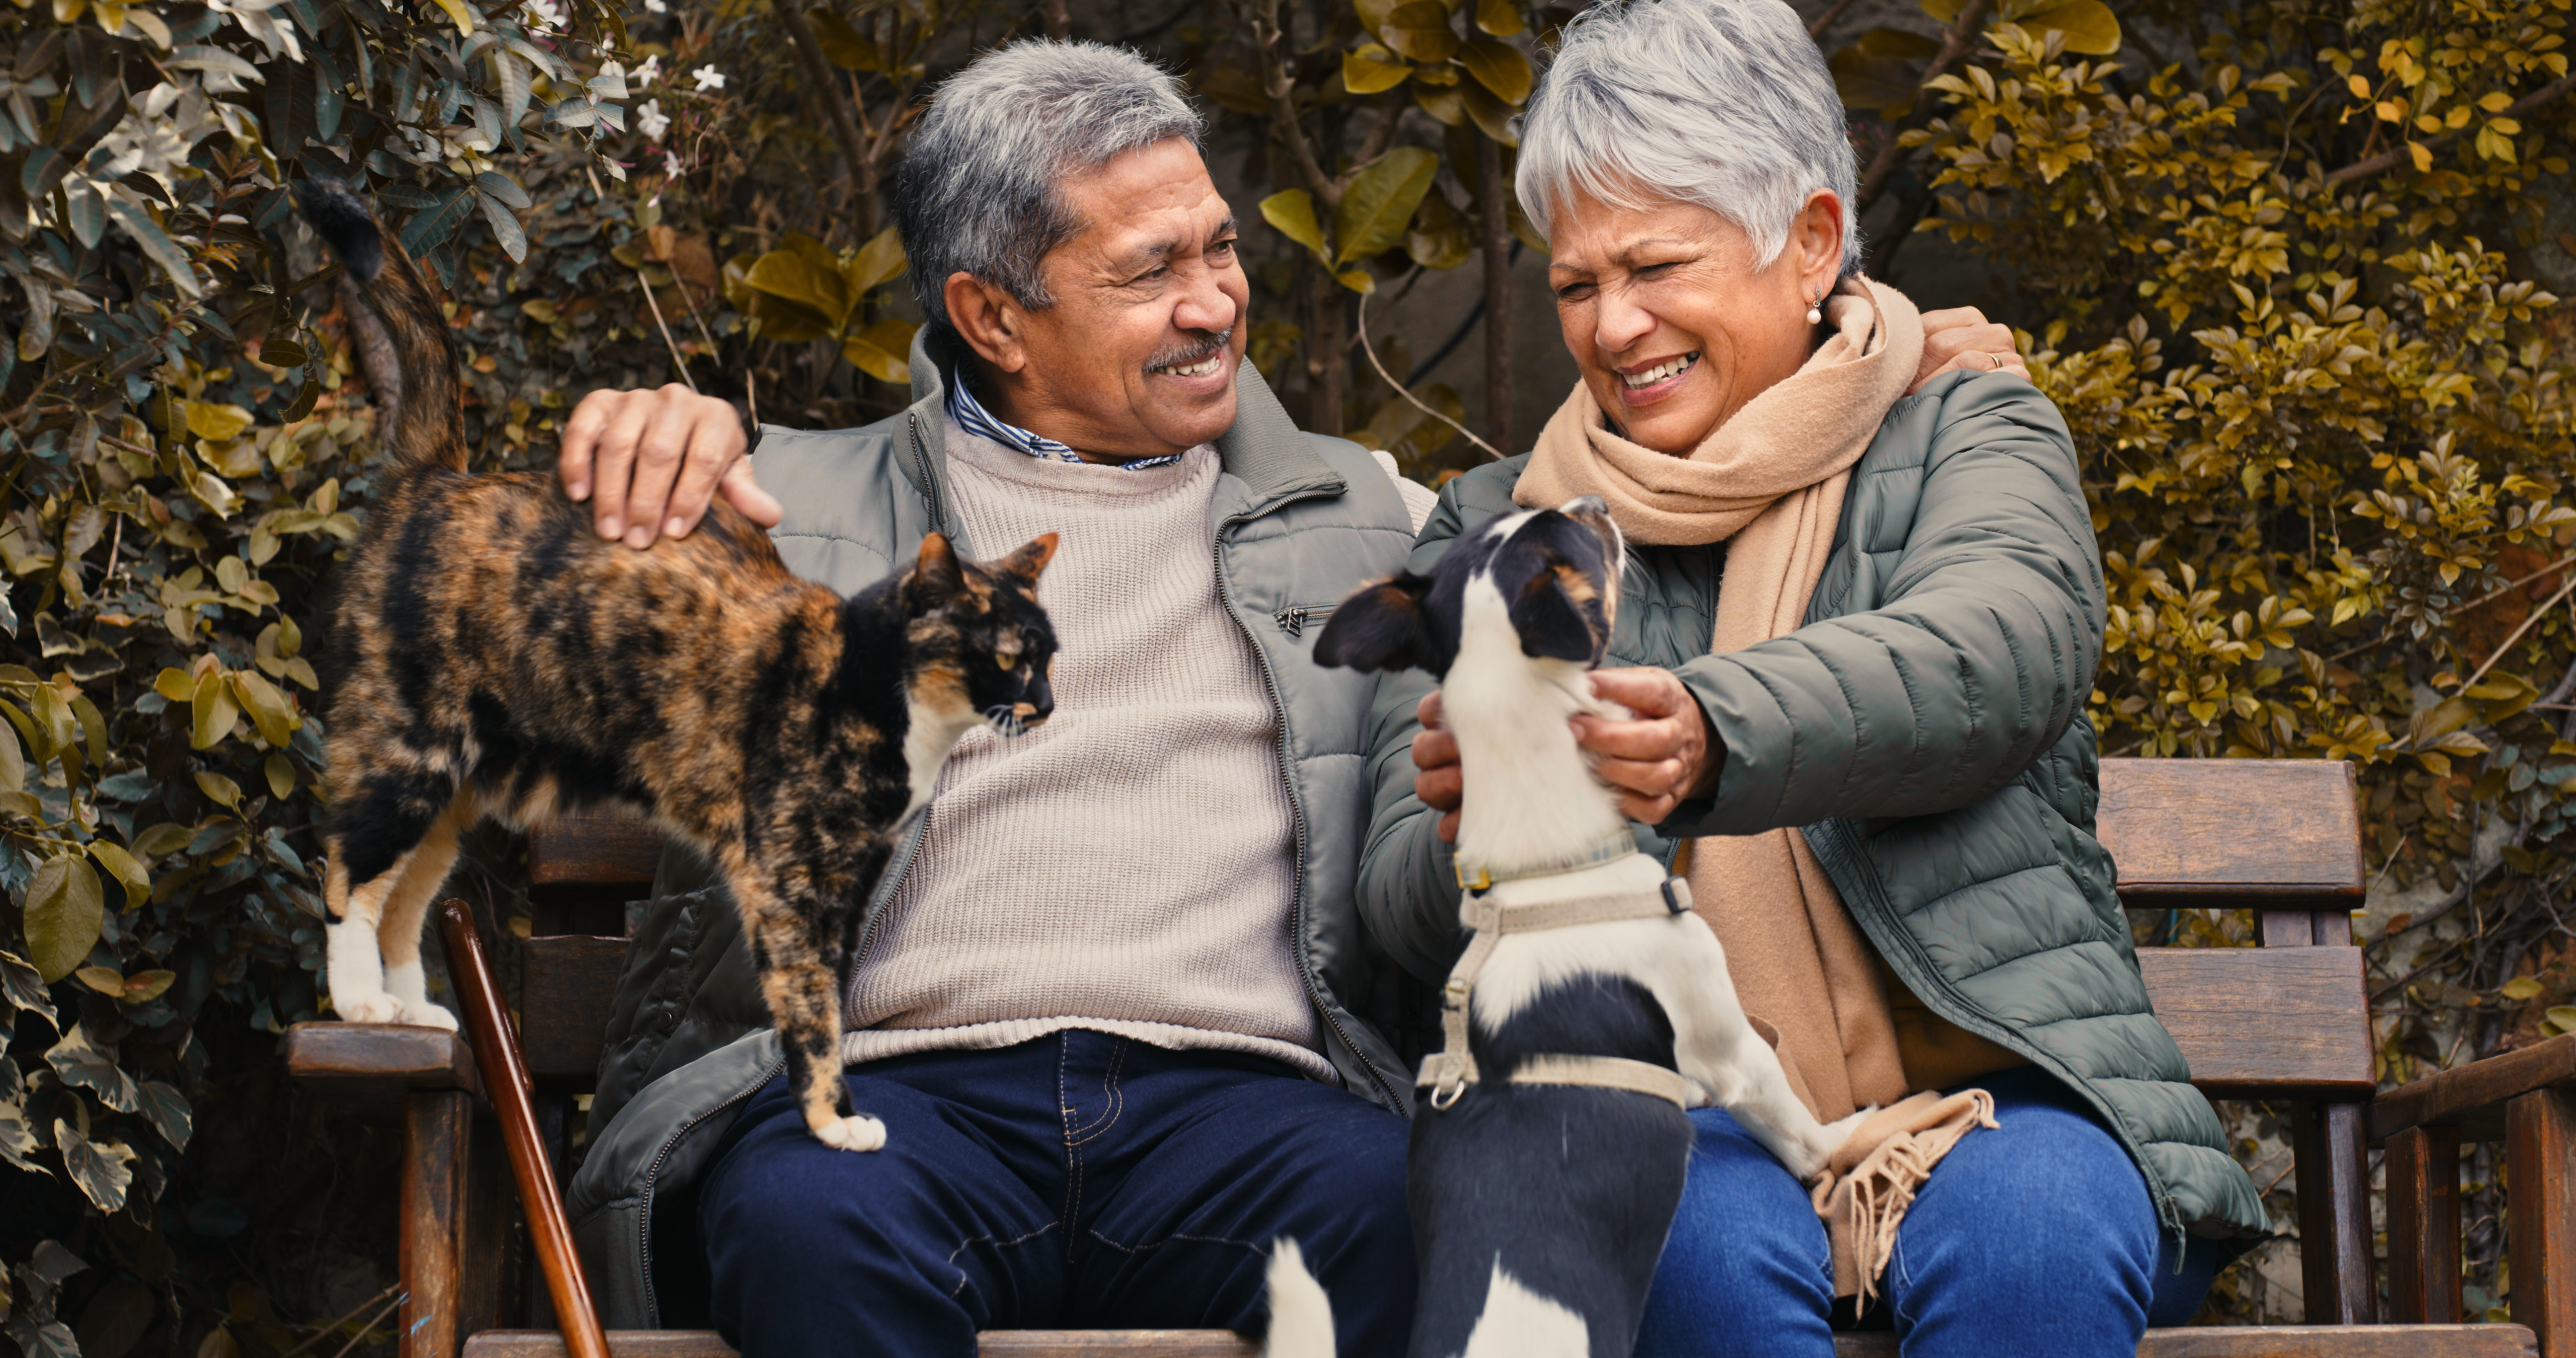 5 Benefits of Having a Pet Companion for Seniors